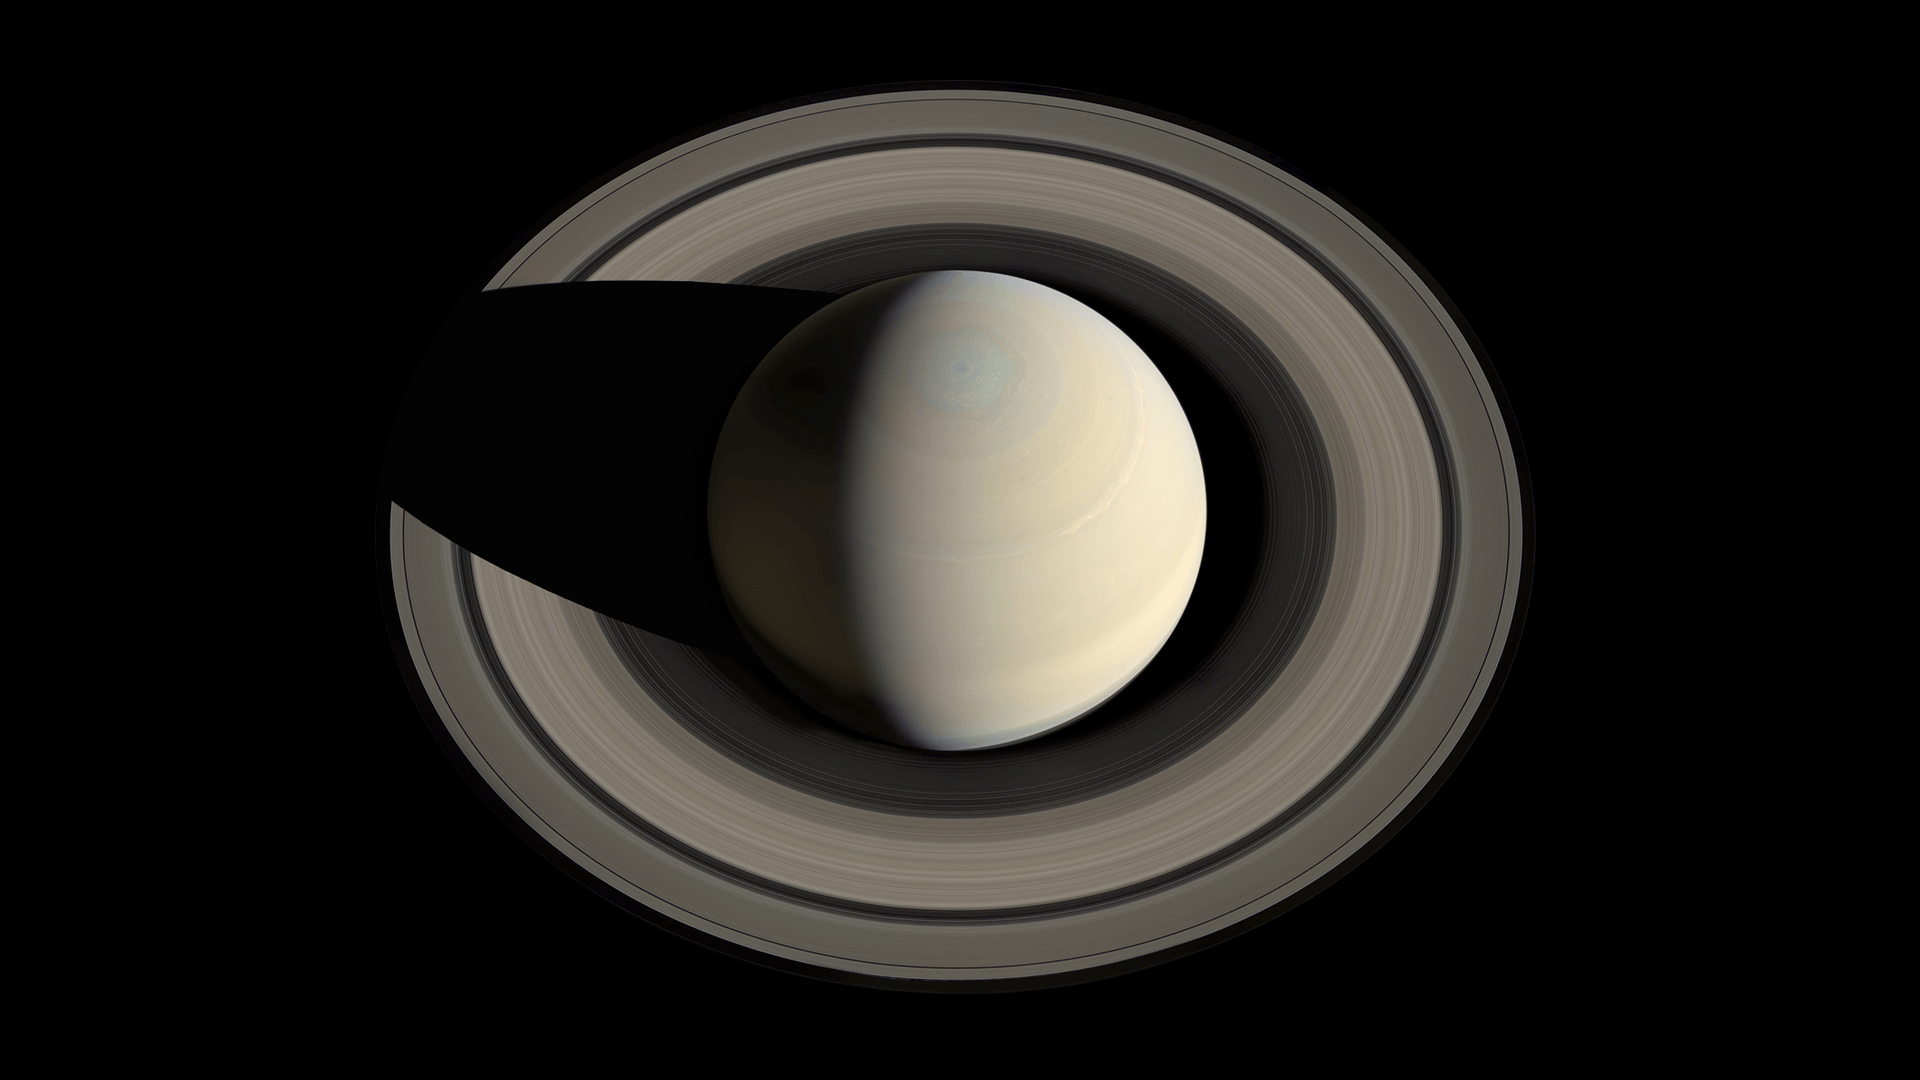 Cassini Saturn 4k Wallpapers Top Free Cassini Saturn 4k Backgrounds Wallpaperaccess 2414